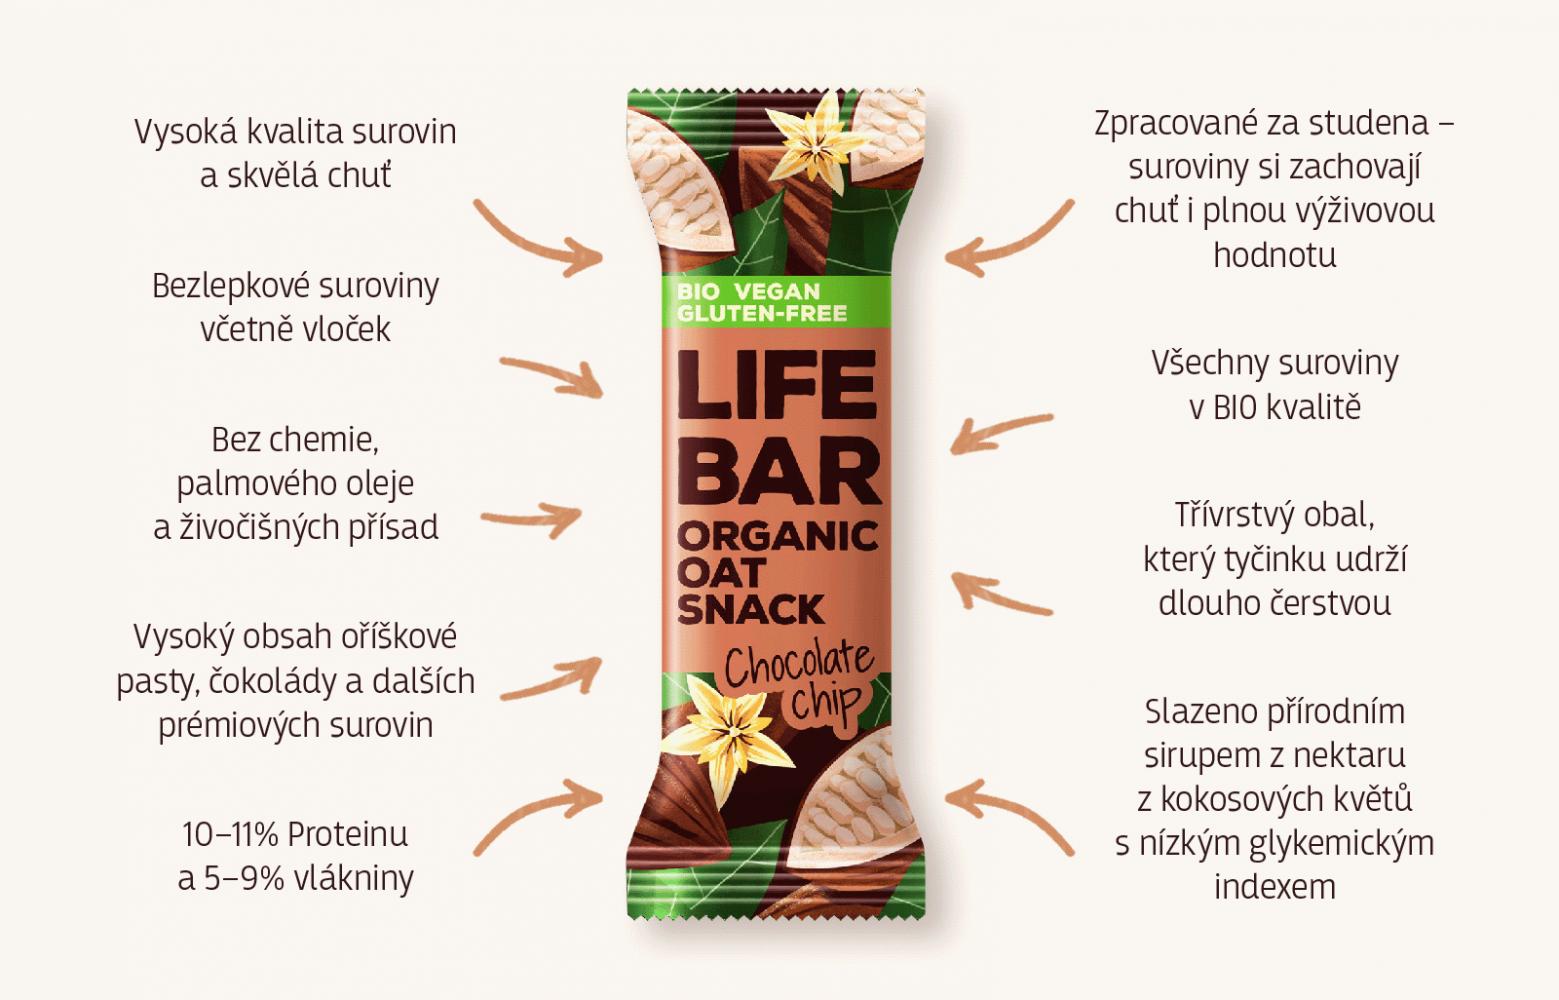 Lifebar-Out-Snack-Benefity-CZ-Chocolate-Chip-barevne-1000-1000